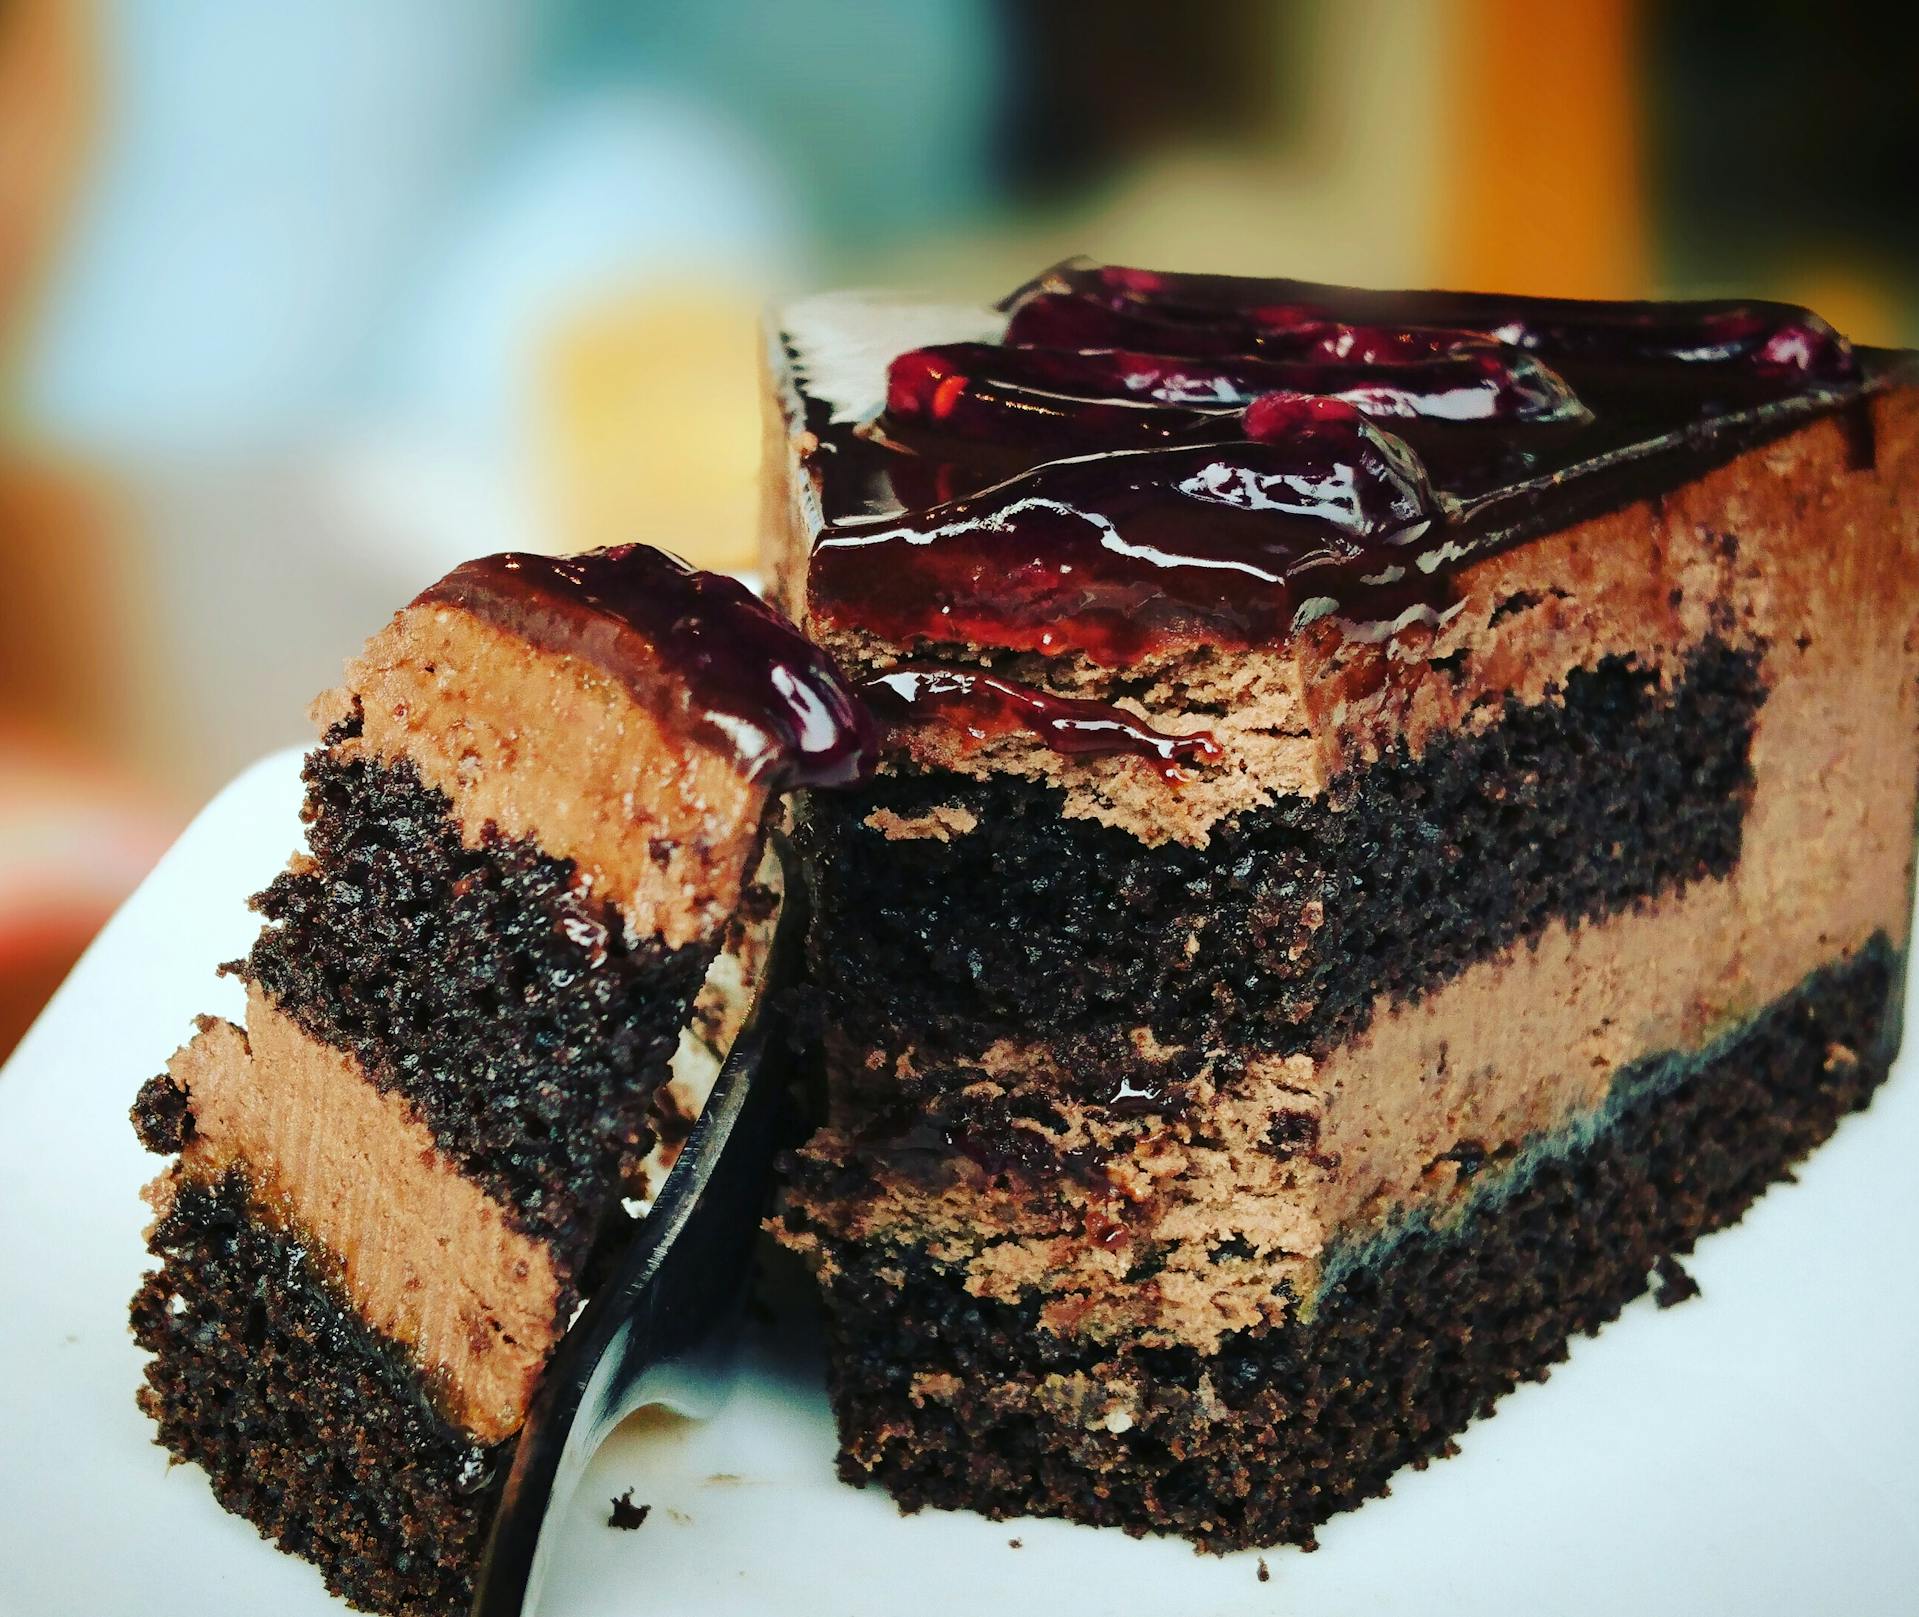 A slice of cake | Source: Pexels